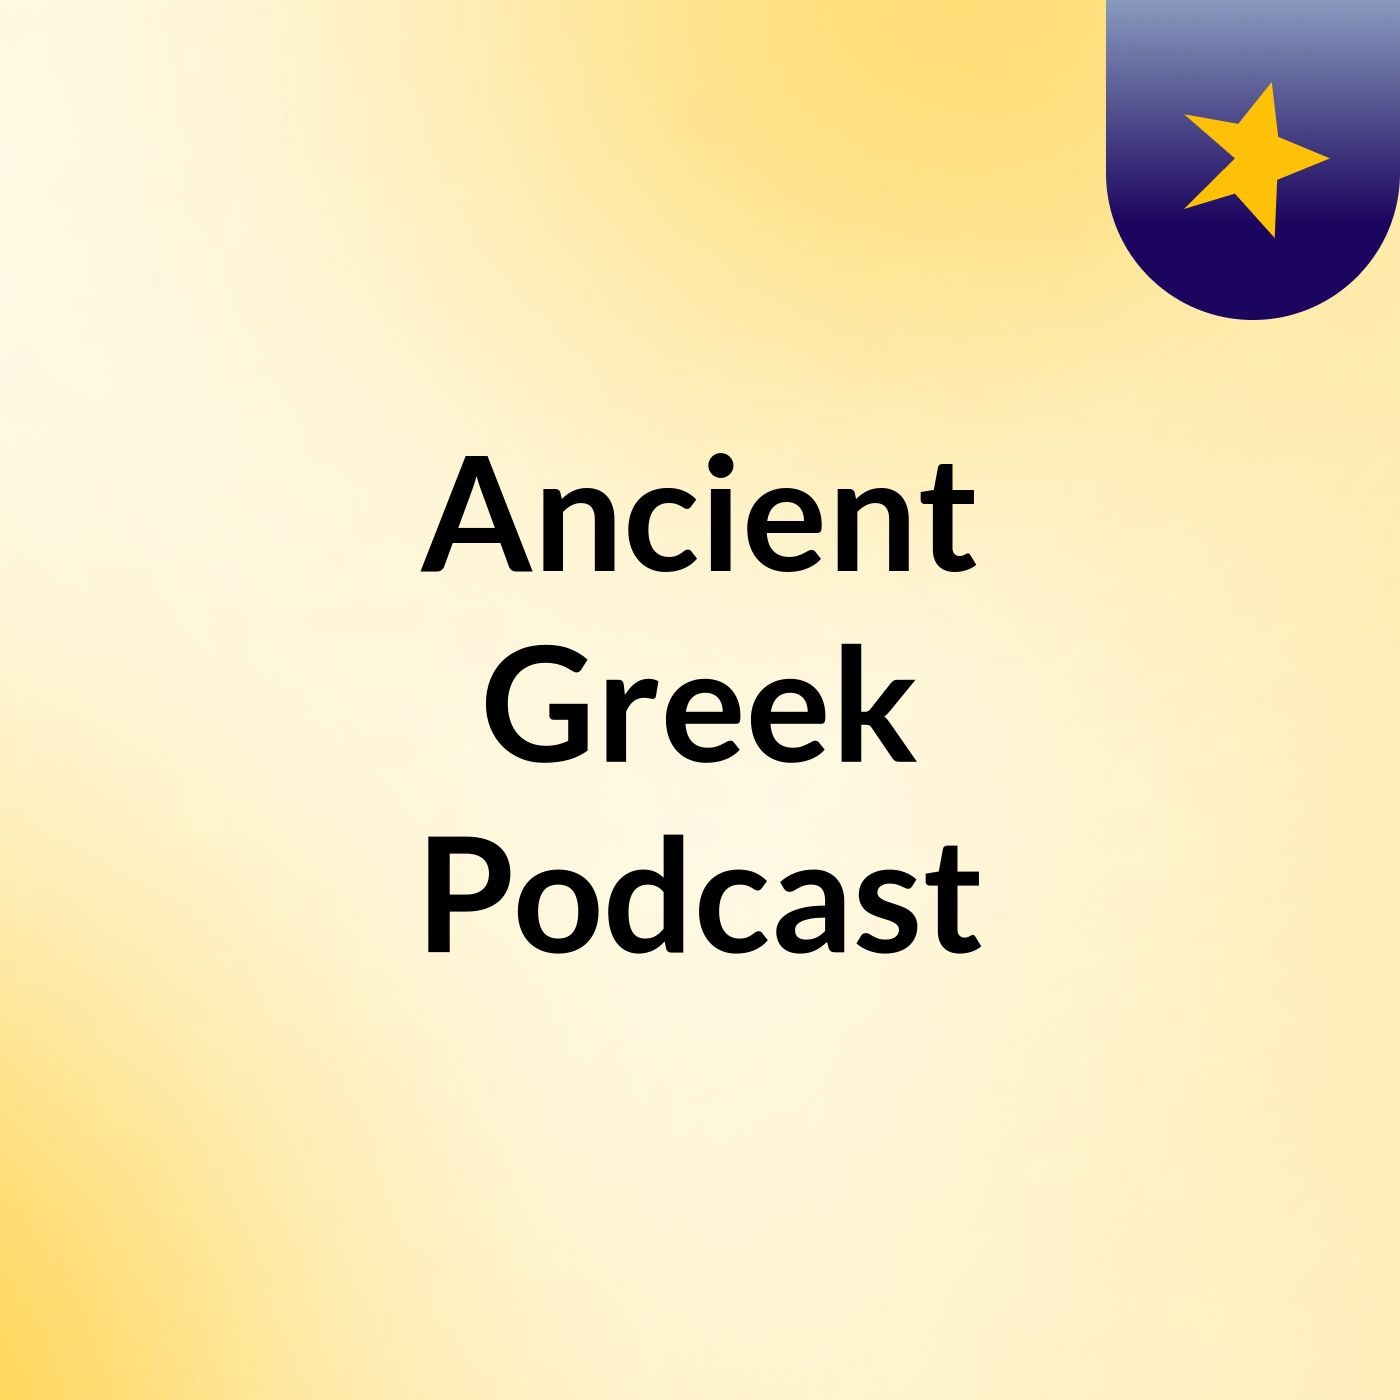 Ancient Greek Podcast